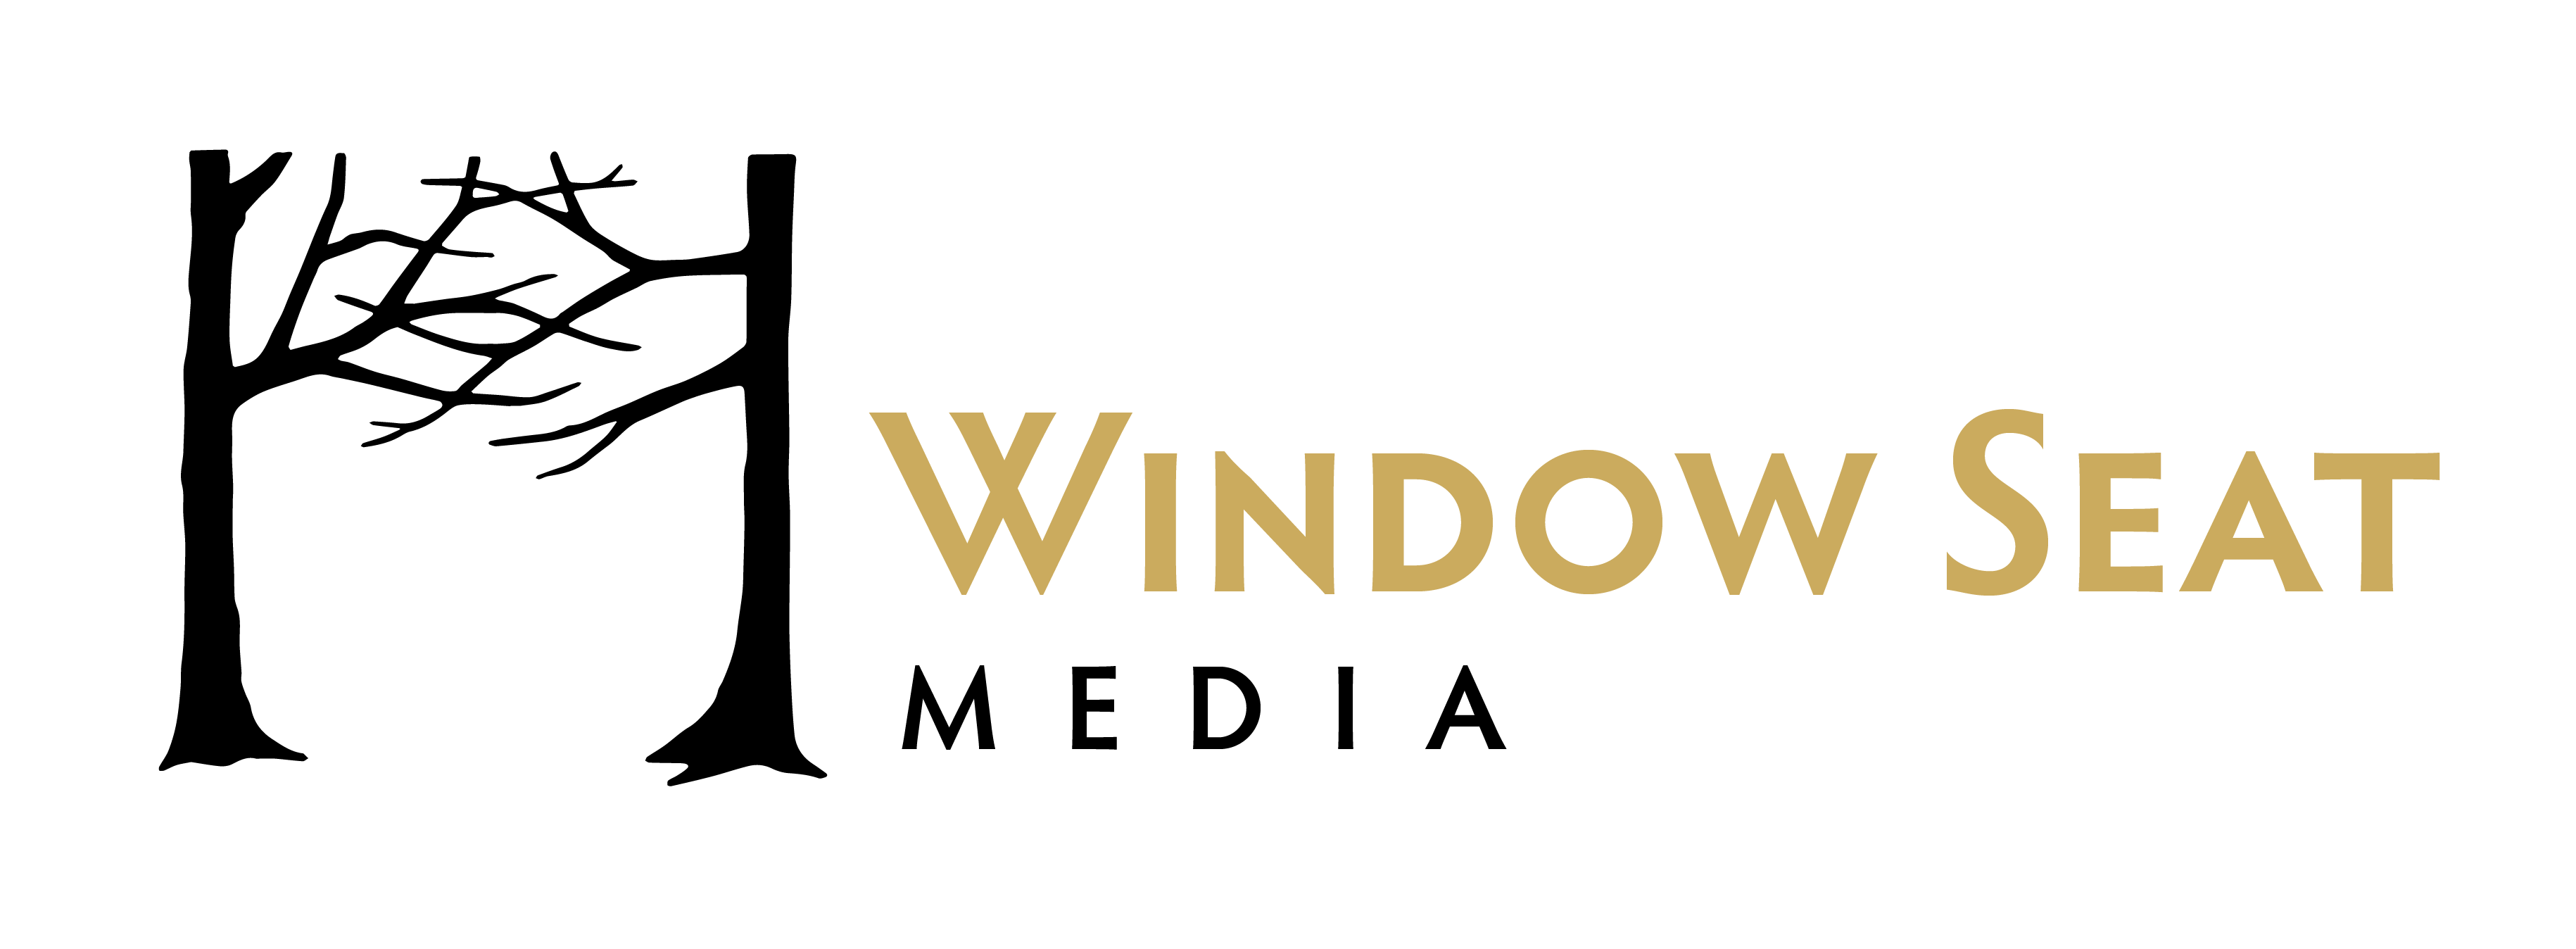 Window Seat Media logo